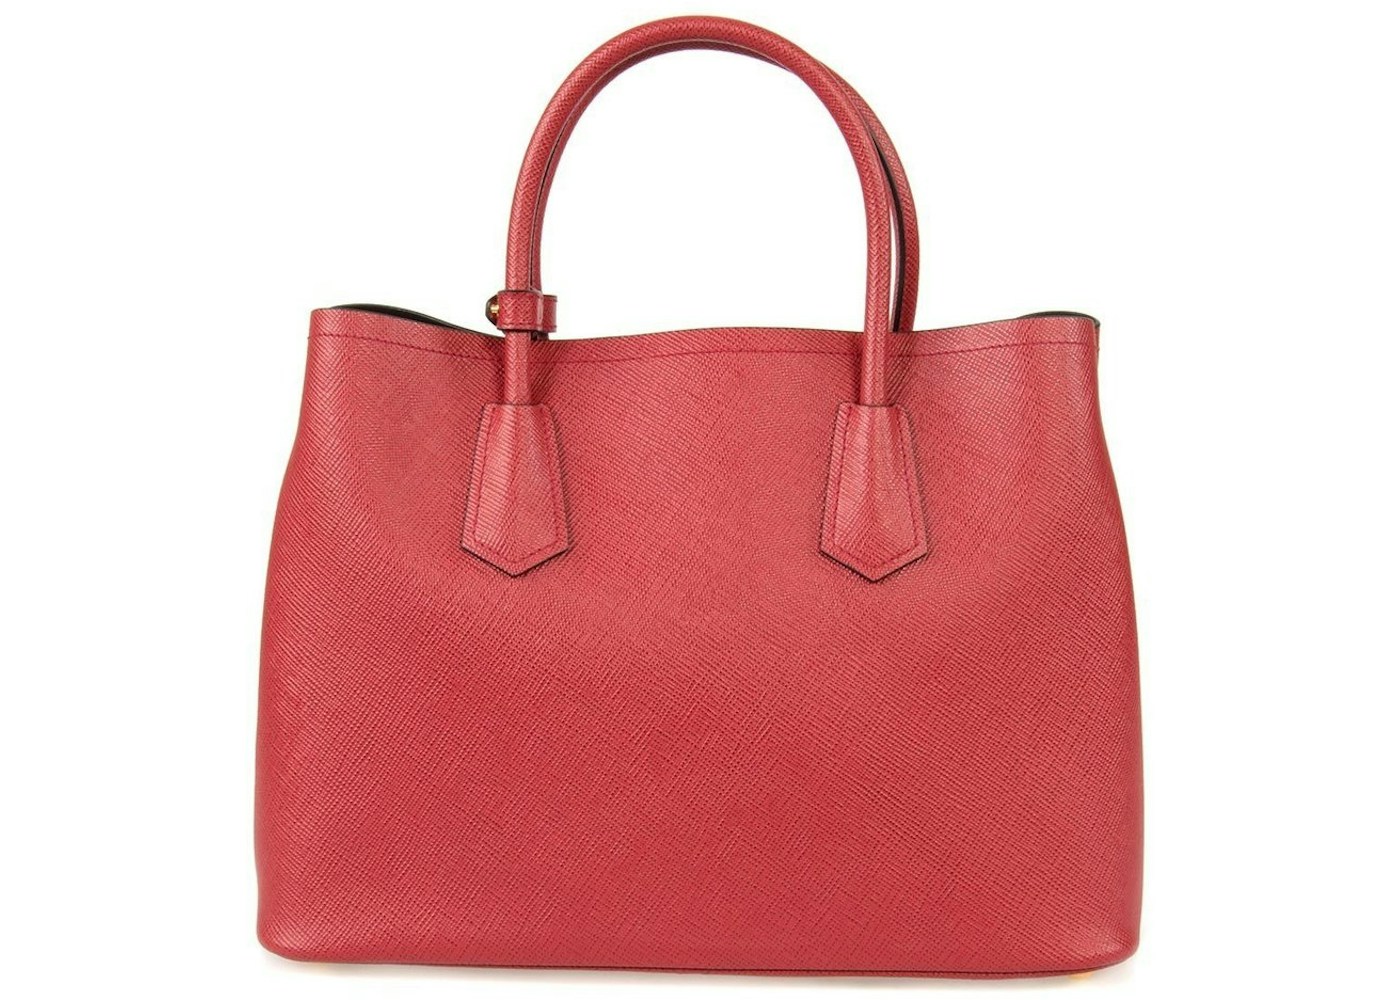 Prada Saffiano Cuir Handbag Pink in Leather with Gold-tone